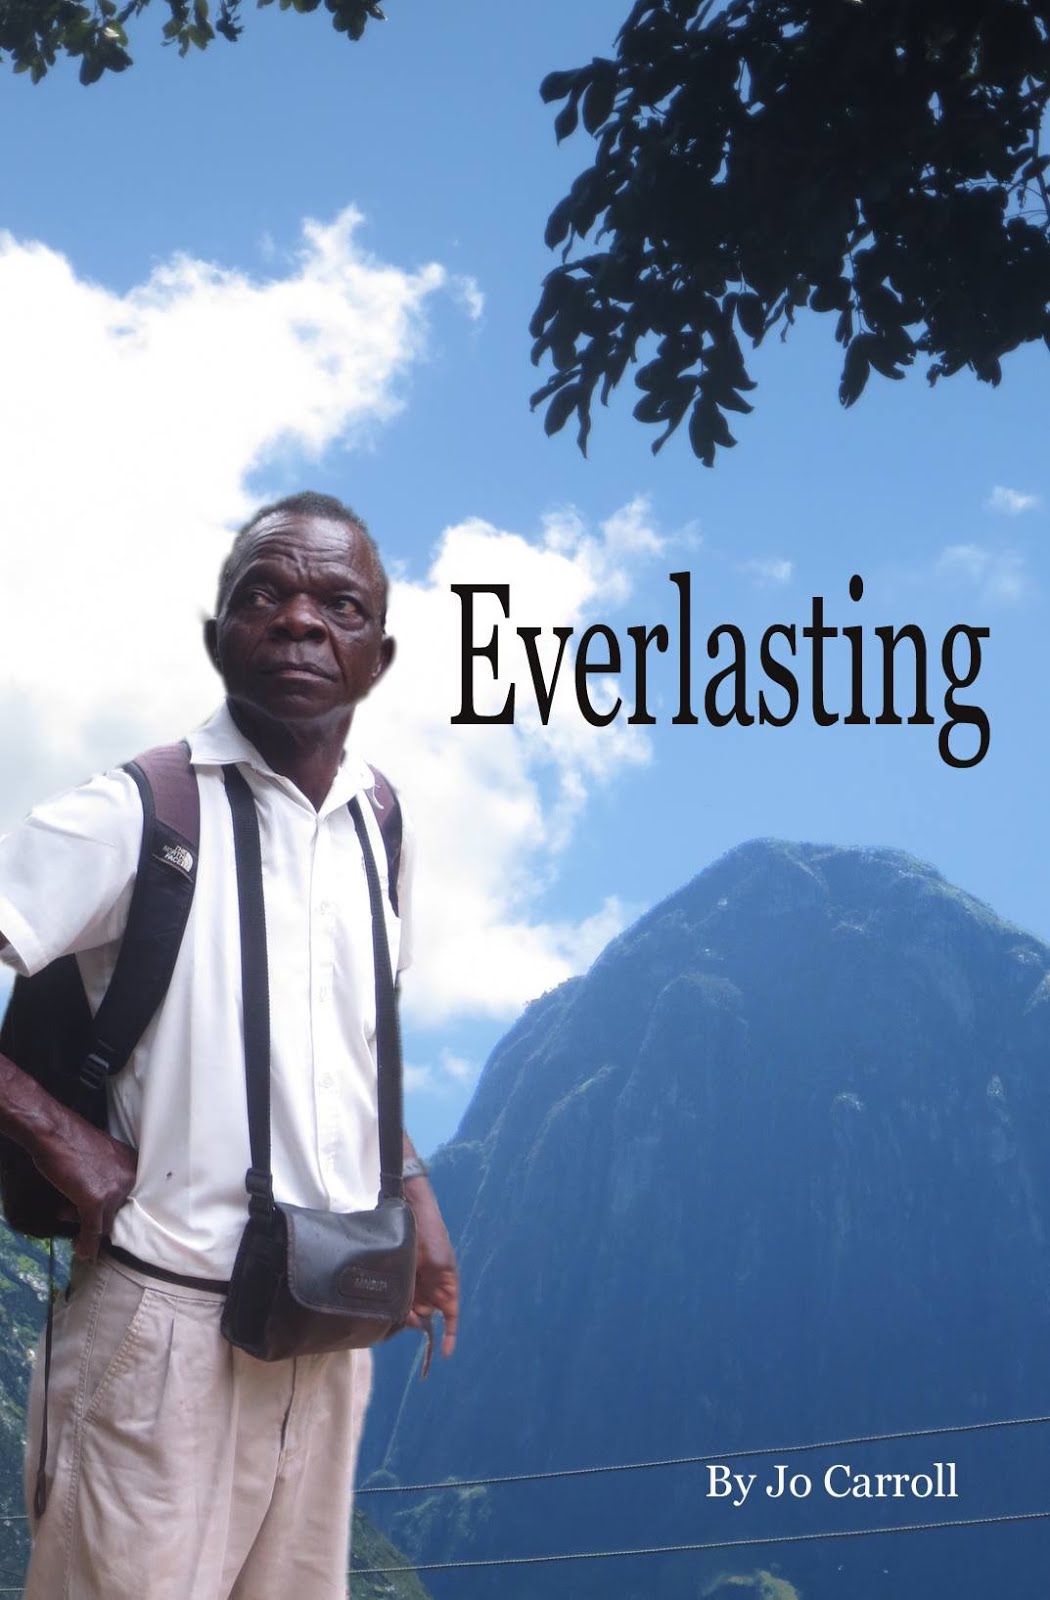 Everlasting - the book!